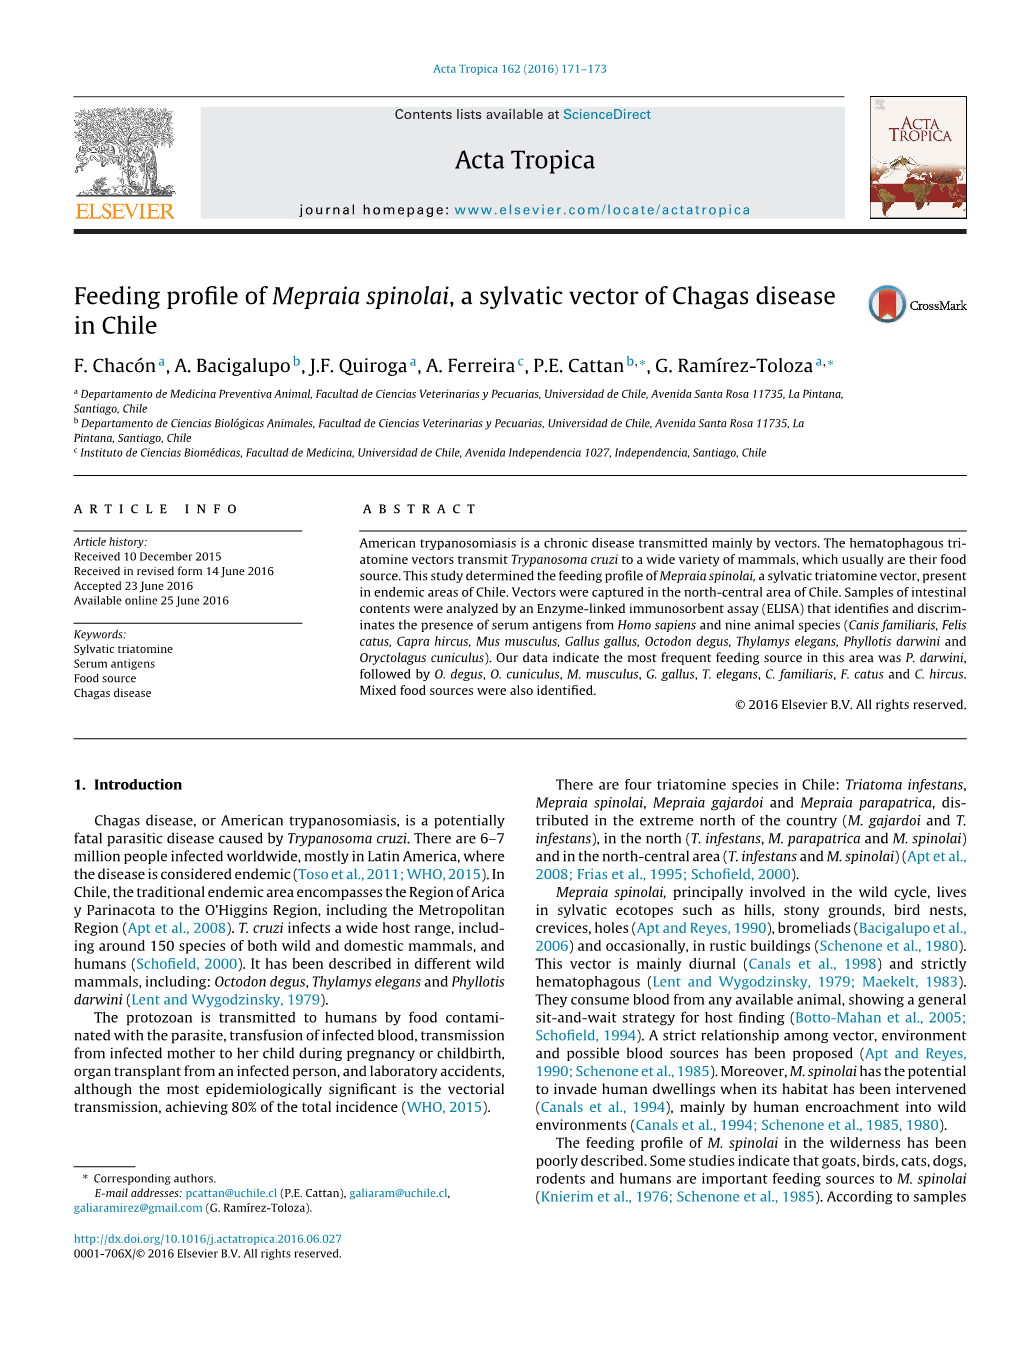 Feeding Profile of Mepraia Spinolai, a Sylvatic Vector of Chagas Disease In